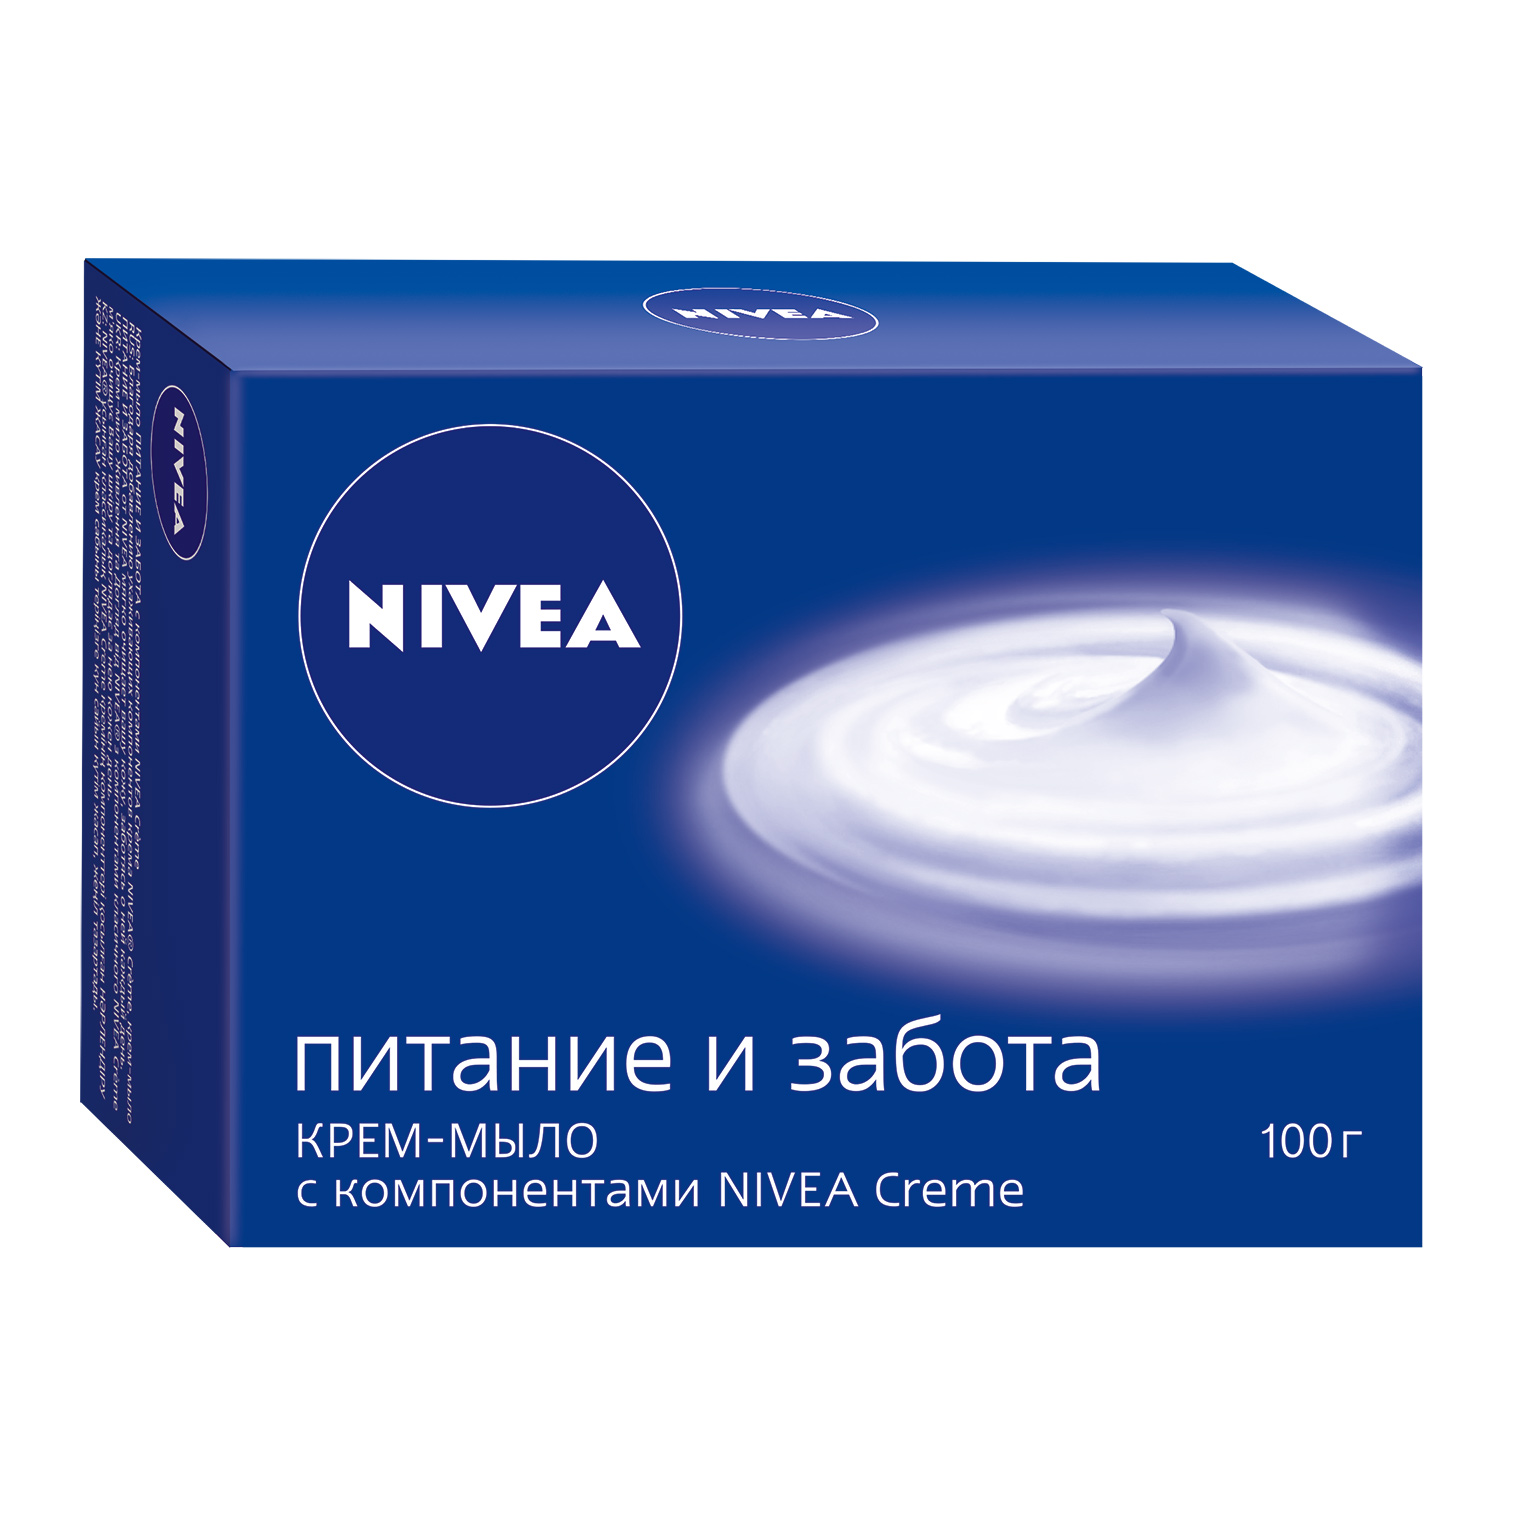 Крем-мыло Питание и забота 100 г Nivea крем мыло nivea питание и забота с компонентами nivea crème 100 гр